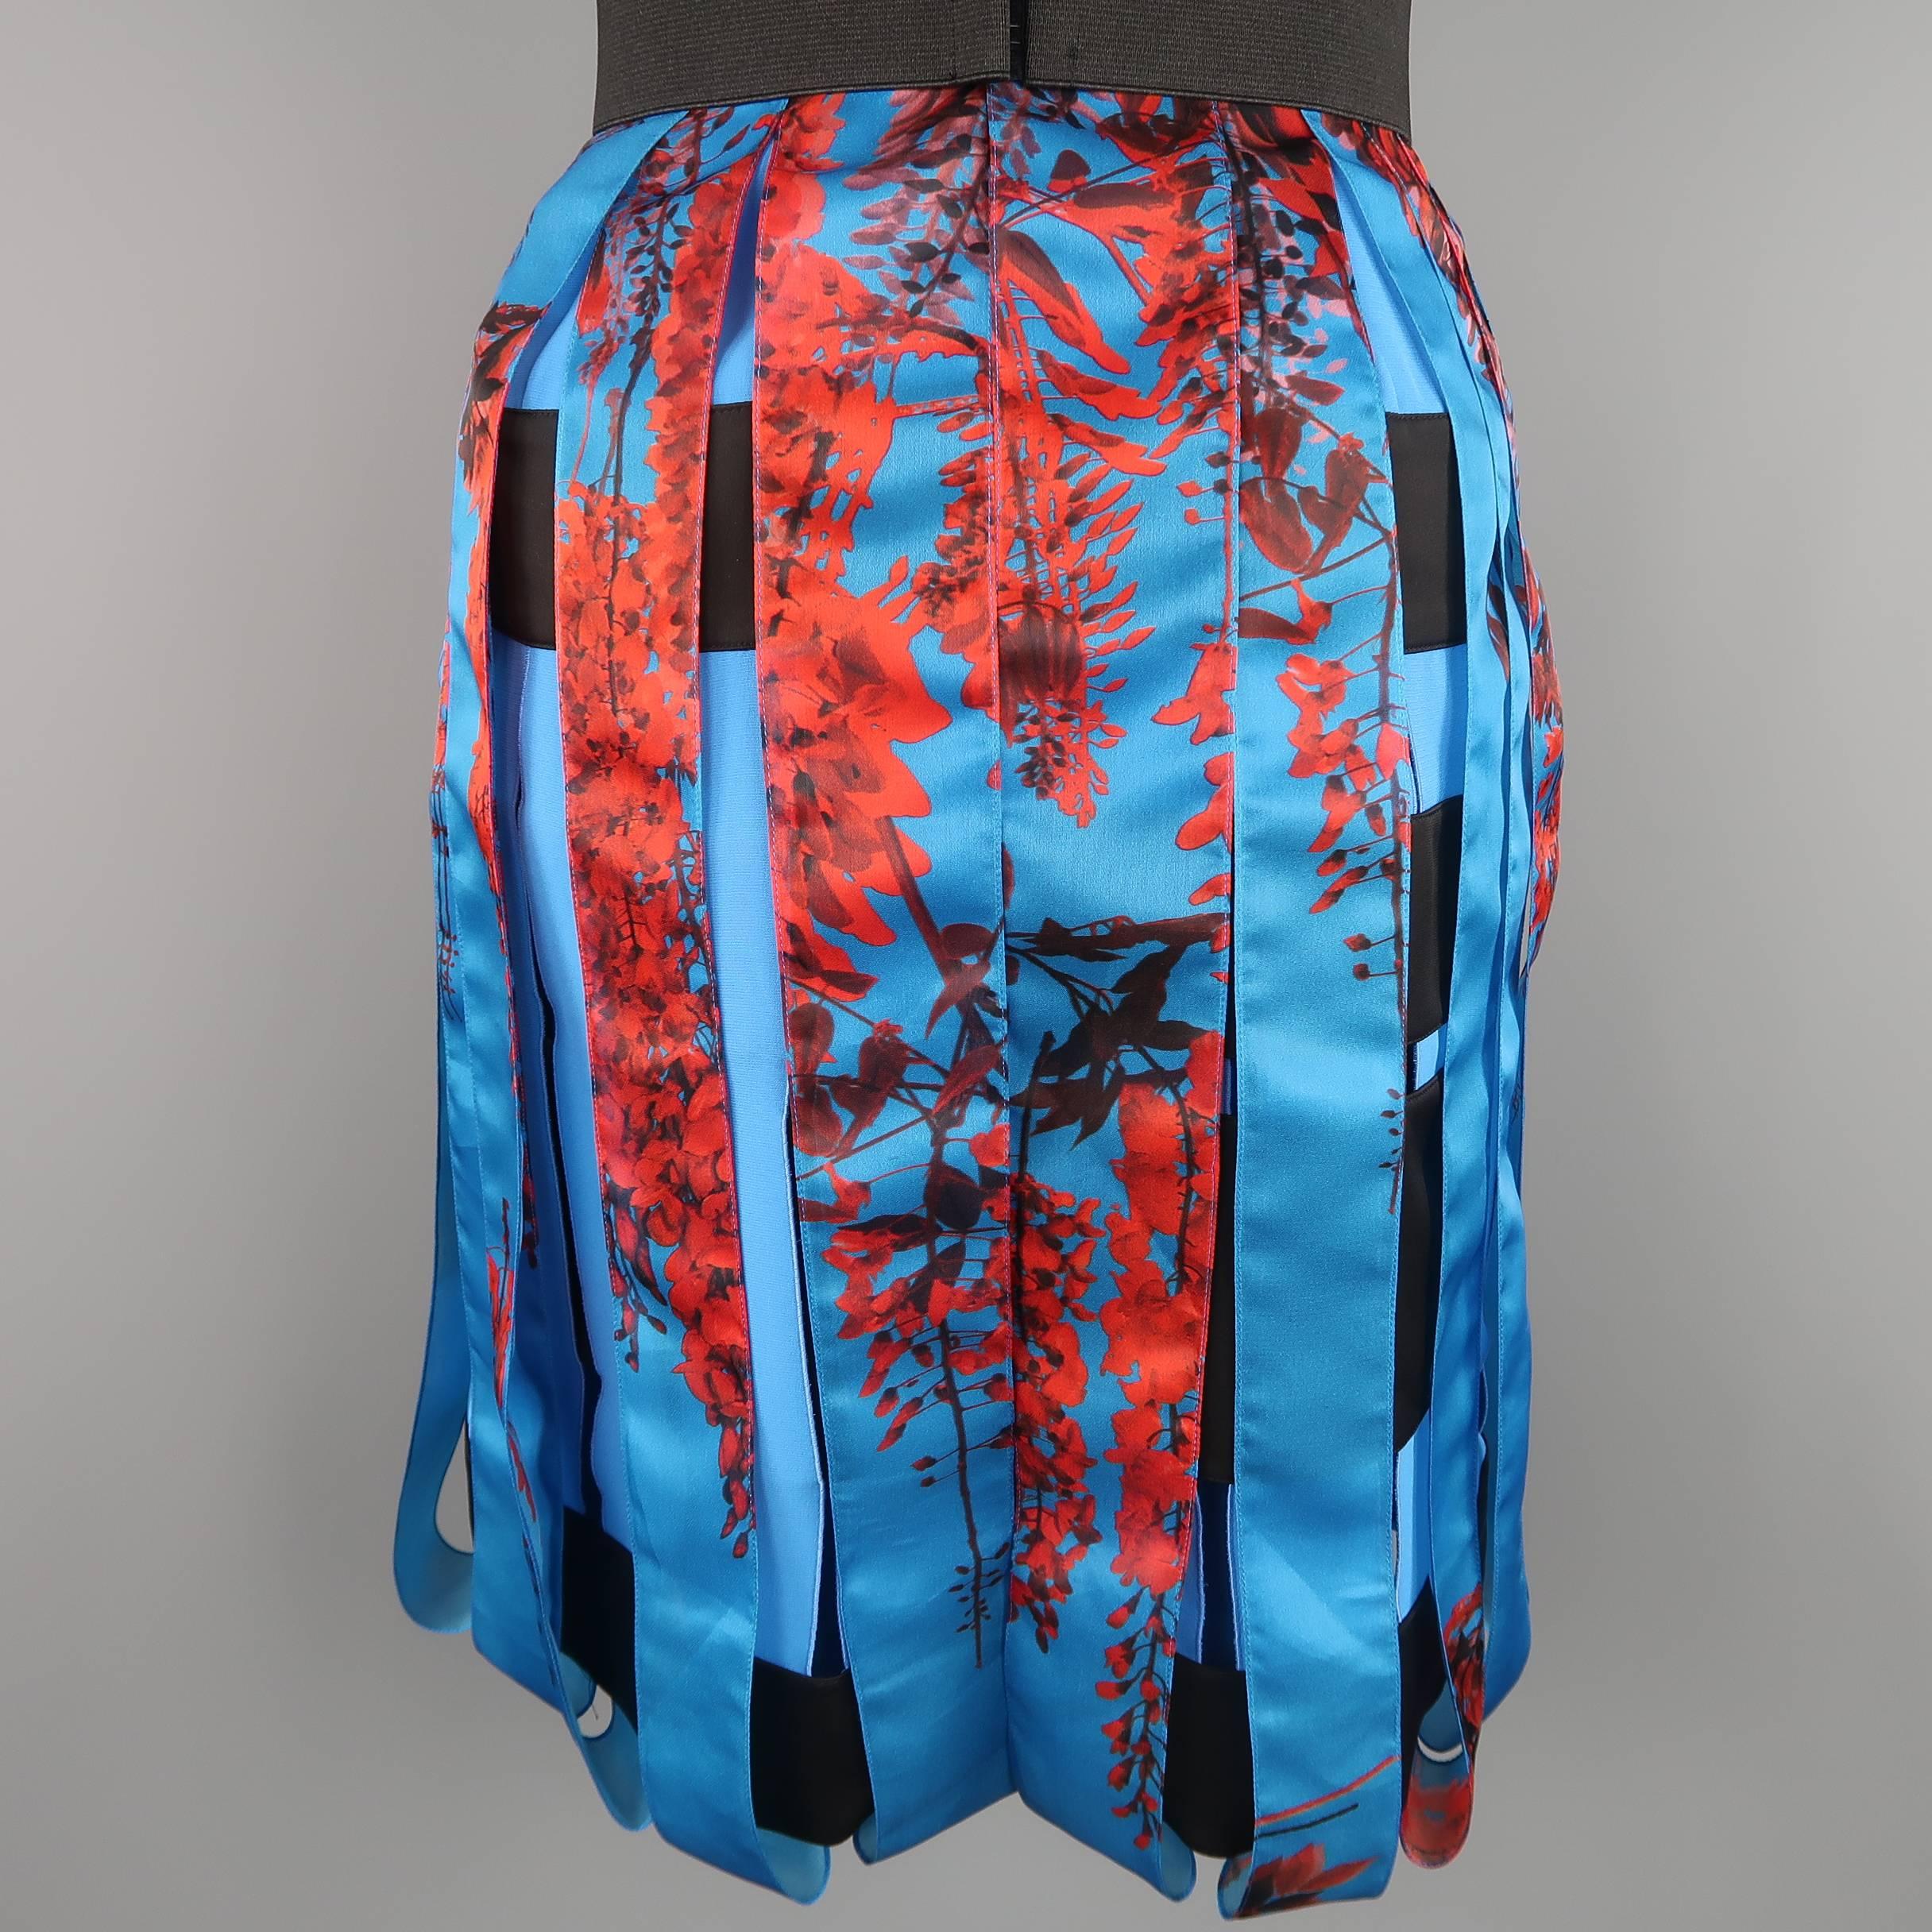 Christian Dior Dress - Spring 2014 Runway - Blue, Red, Floral, Silk, Cocktail 3